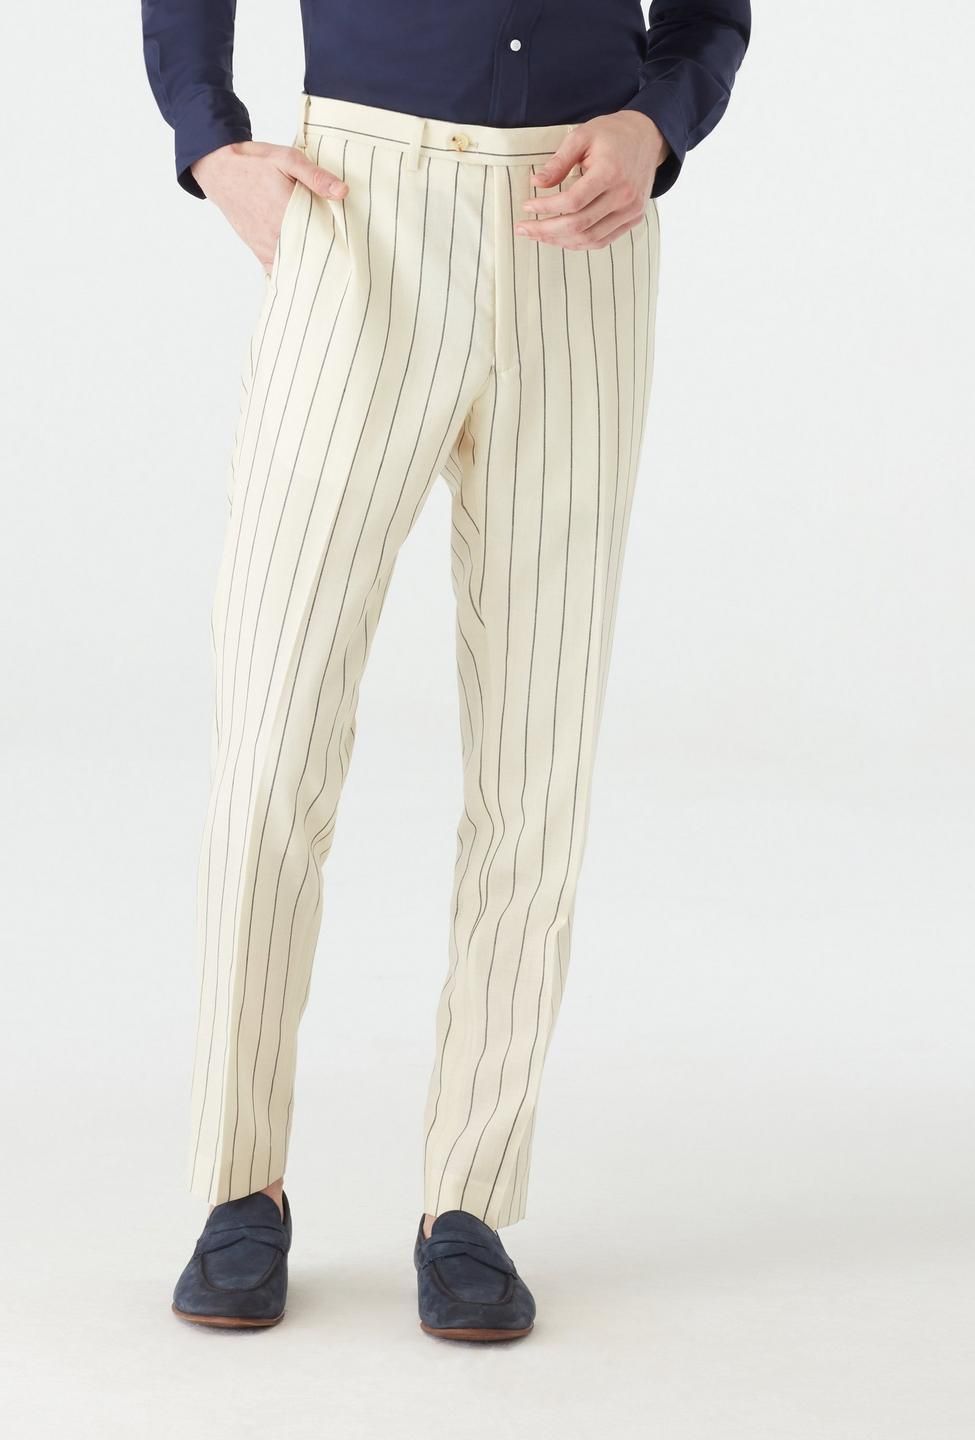 Kingsbury Wide Stripe Ivory Pants | Indochino